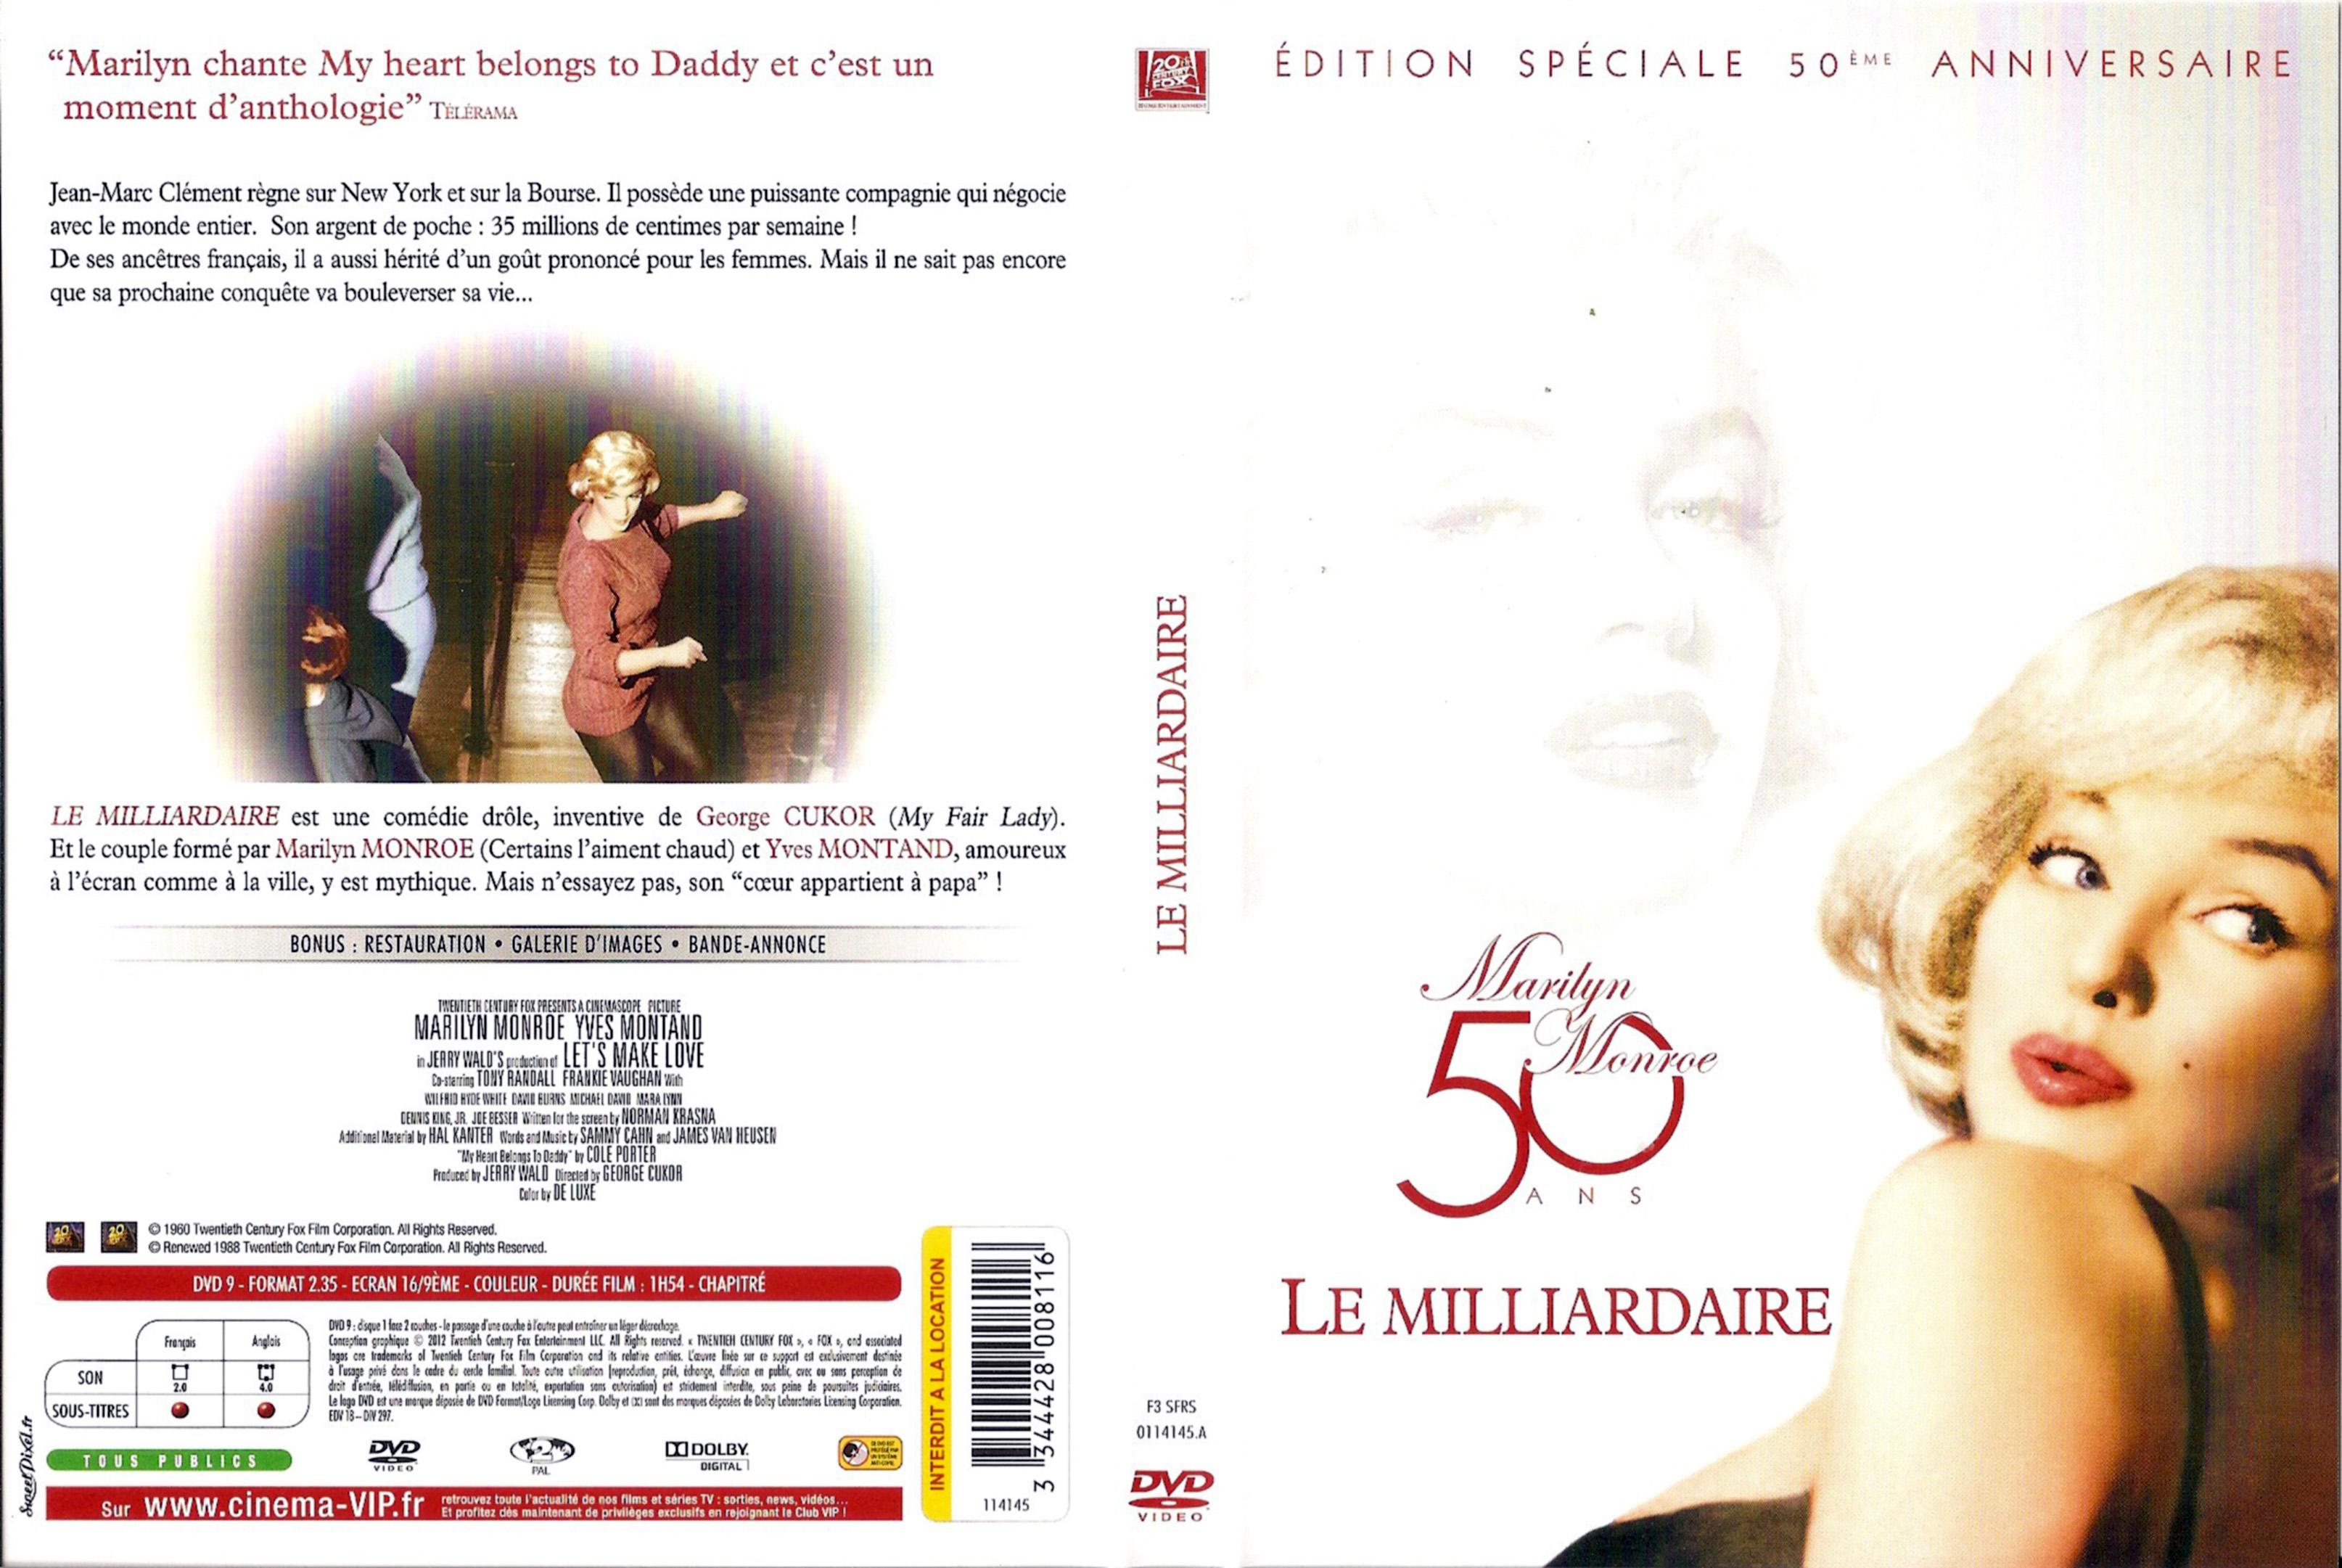 Jaquette DVD Le Milliardaire v2